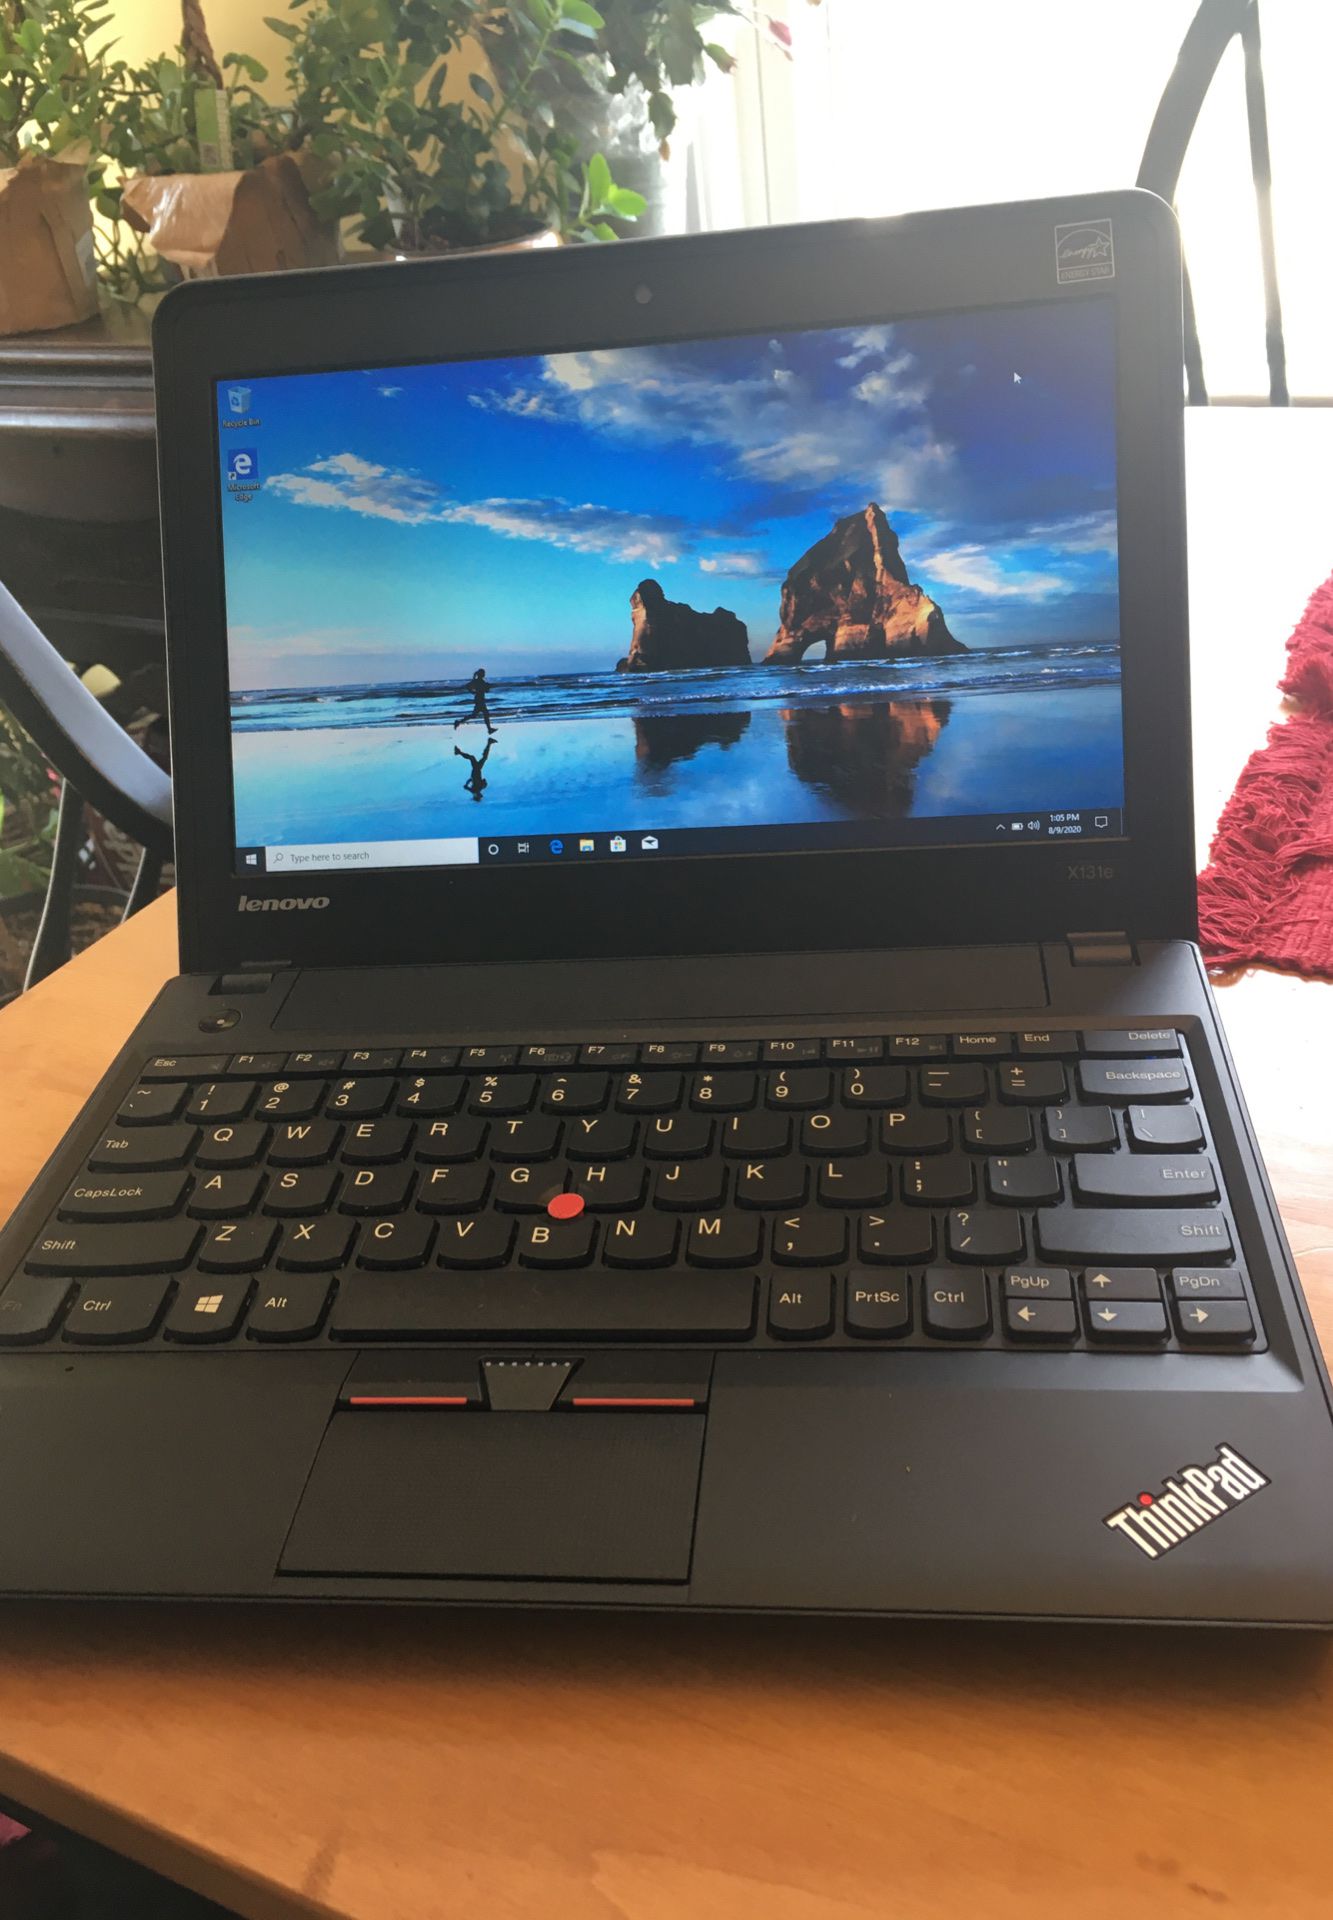 Lenovo Thinkpad x131e laptops - ONLY 1 LEFT